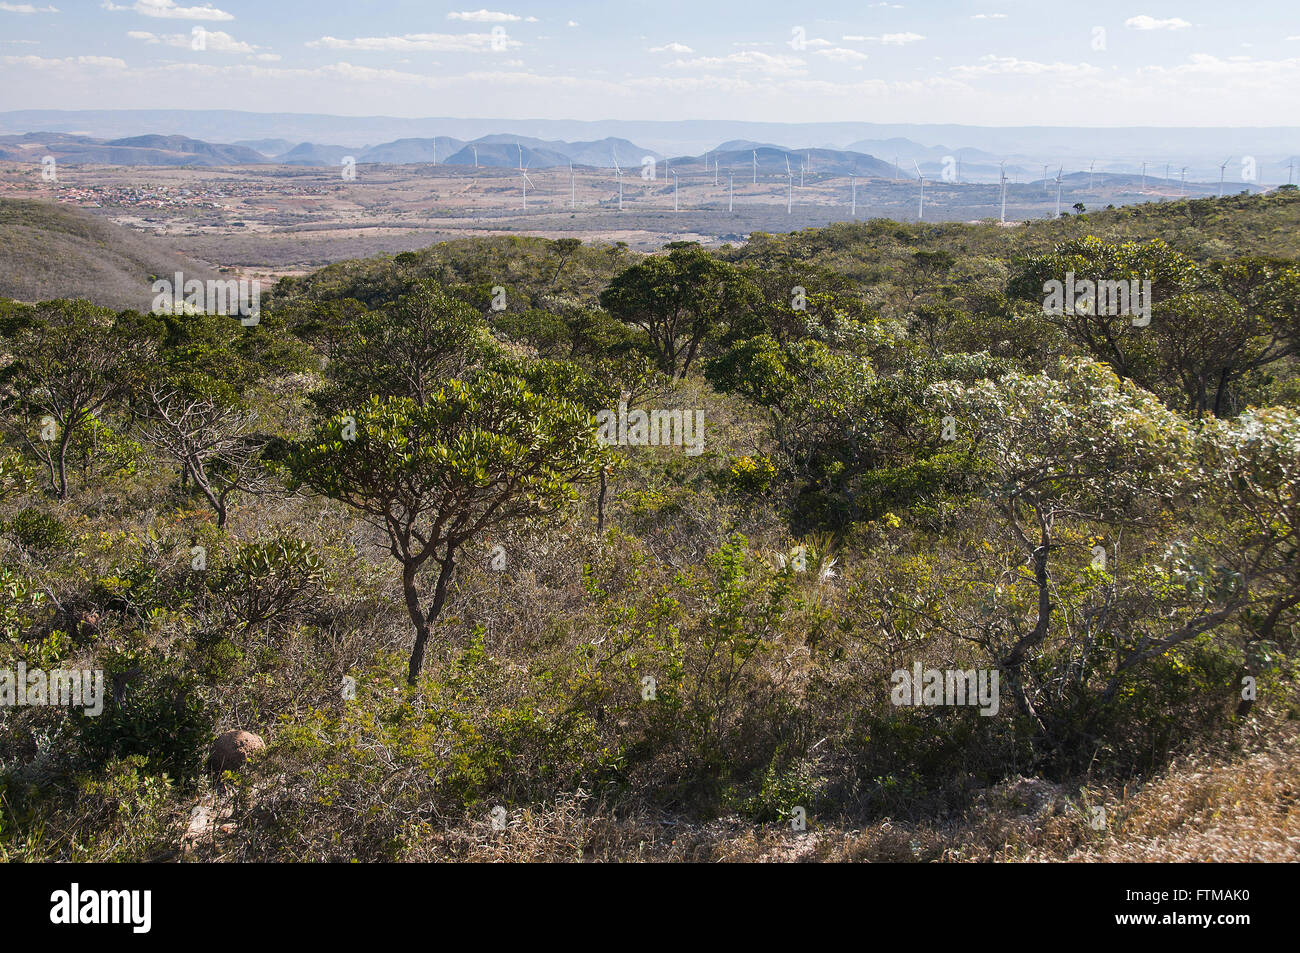 Vegetation in the arid landscape of scrub Stock Photo